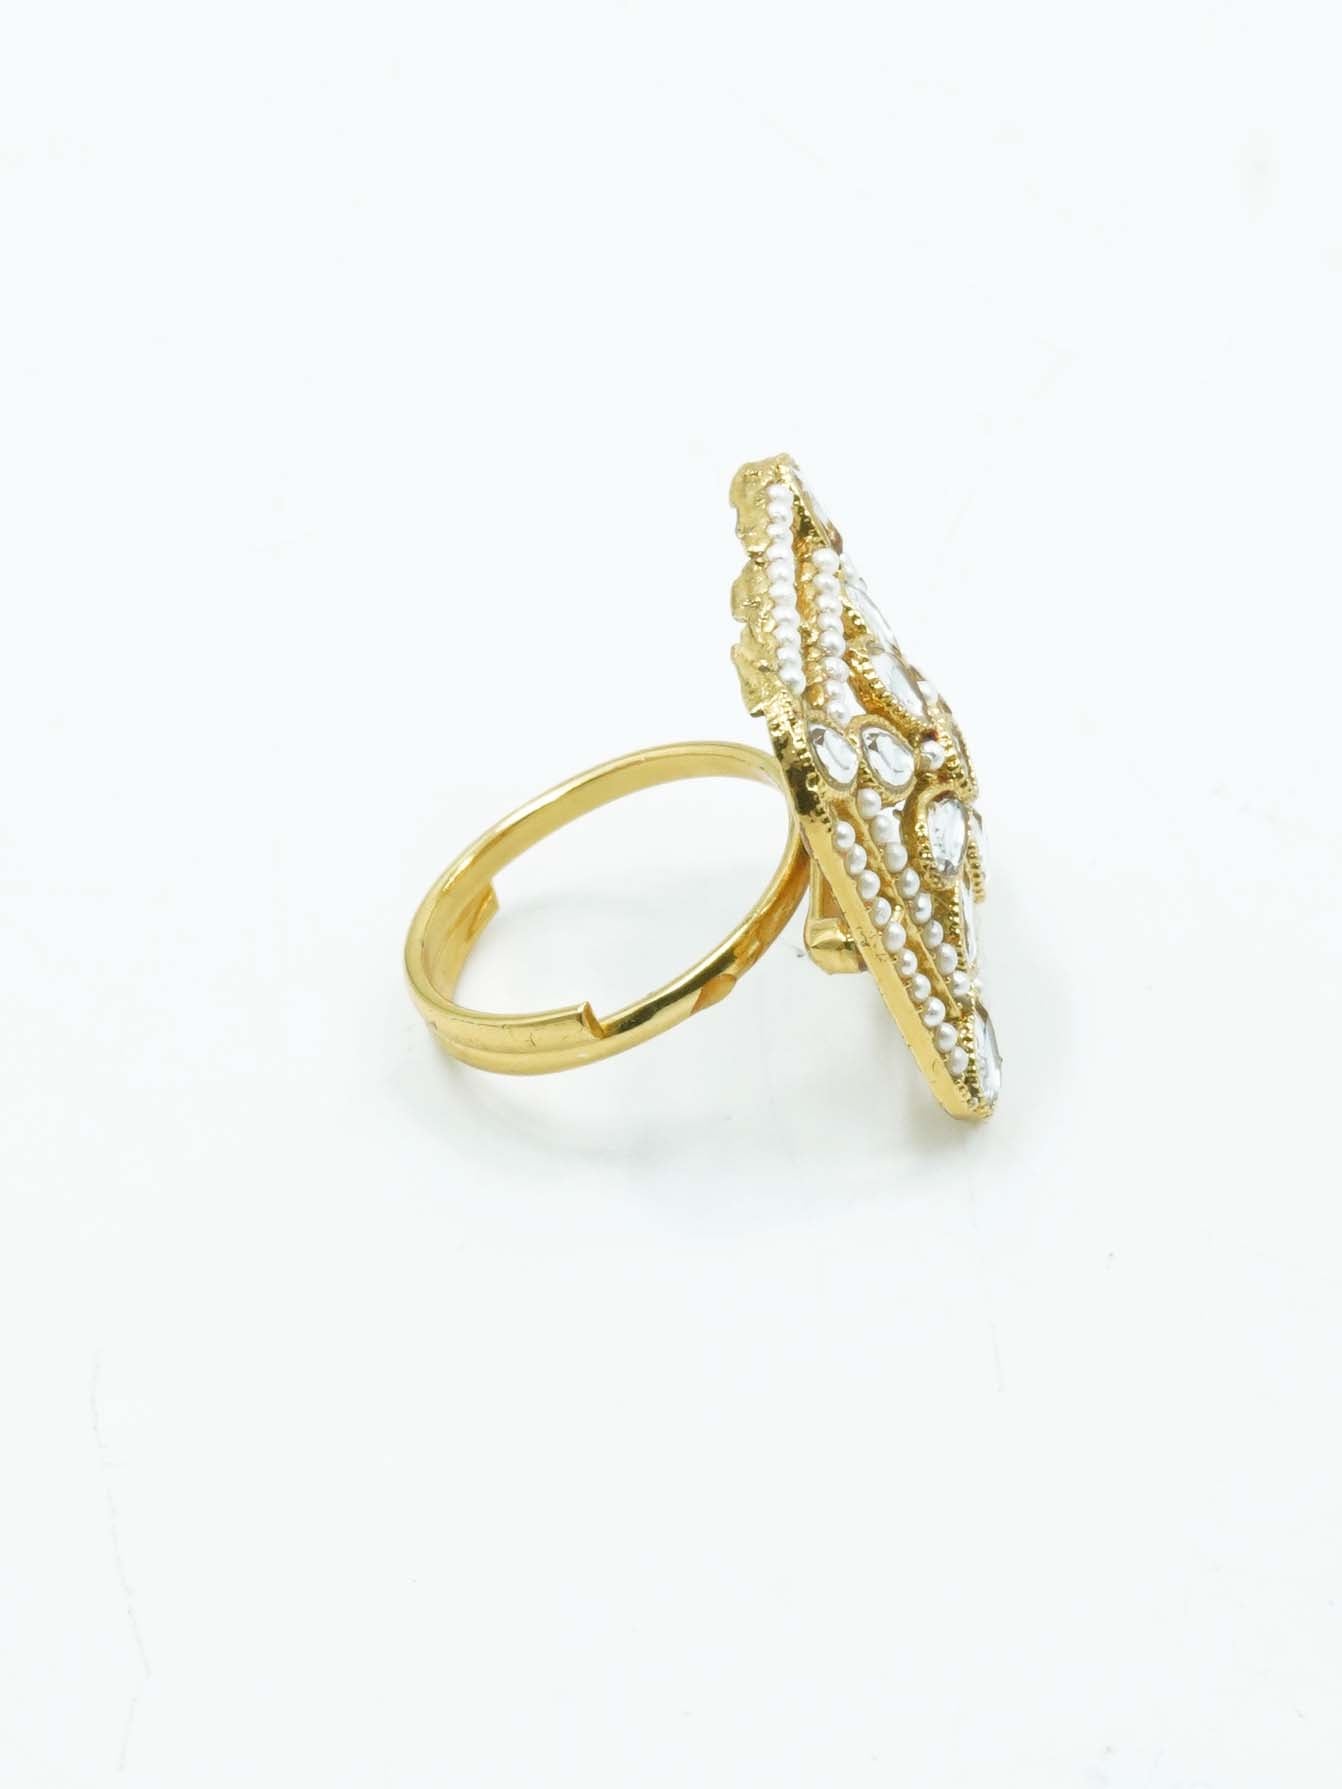 Antique Gold Plated Adjustable Size Designer Finger ring with Stones 10922N